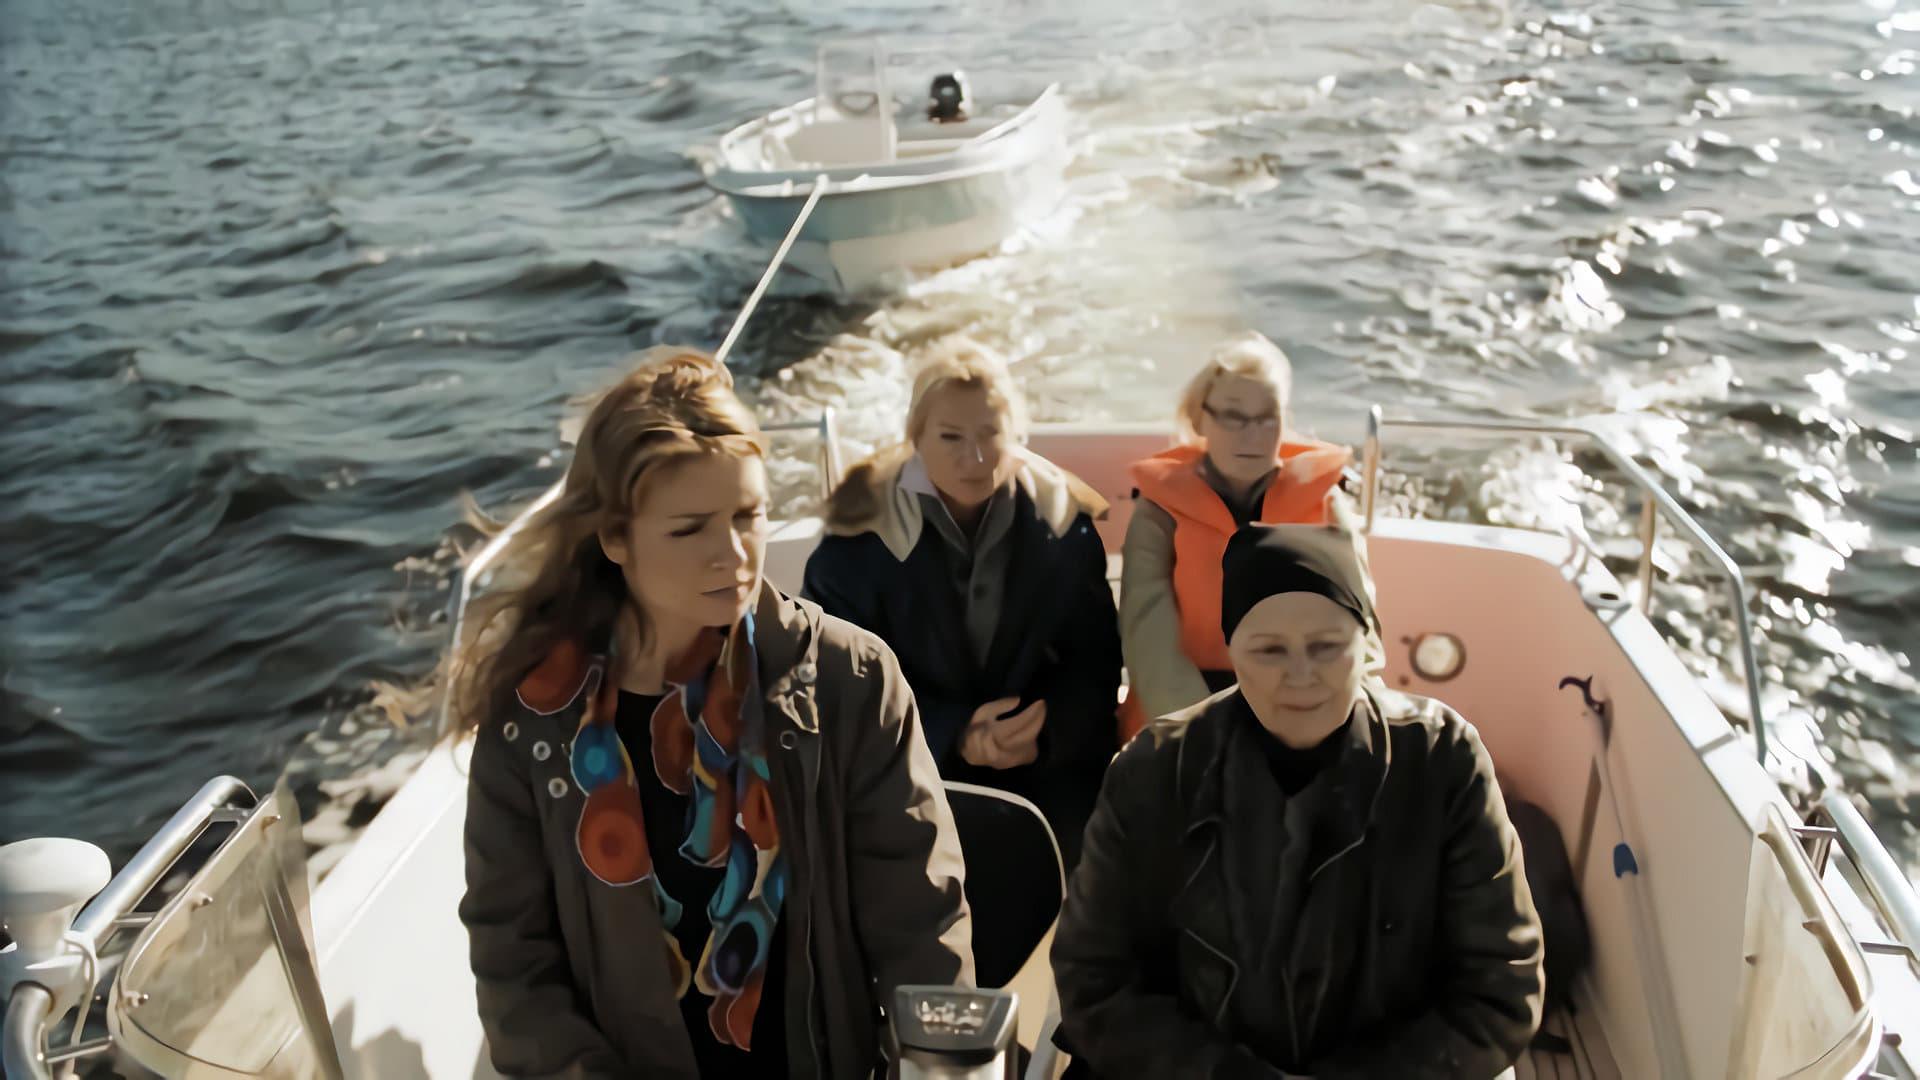 The Fjällbacka Murders: The Sea Gives, the Sea Takes backdrop